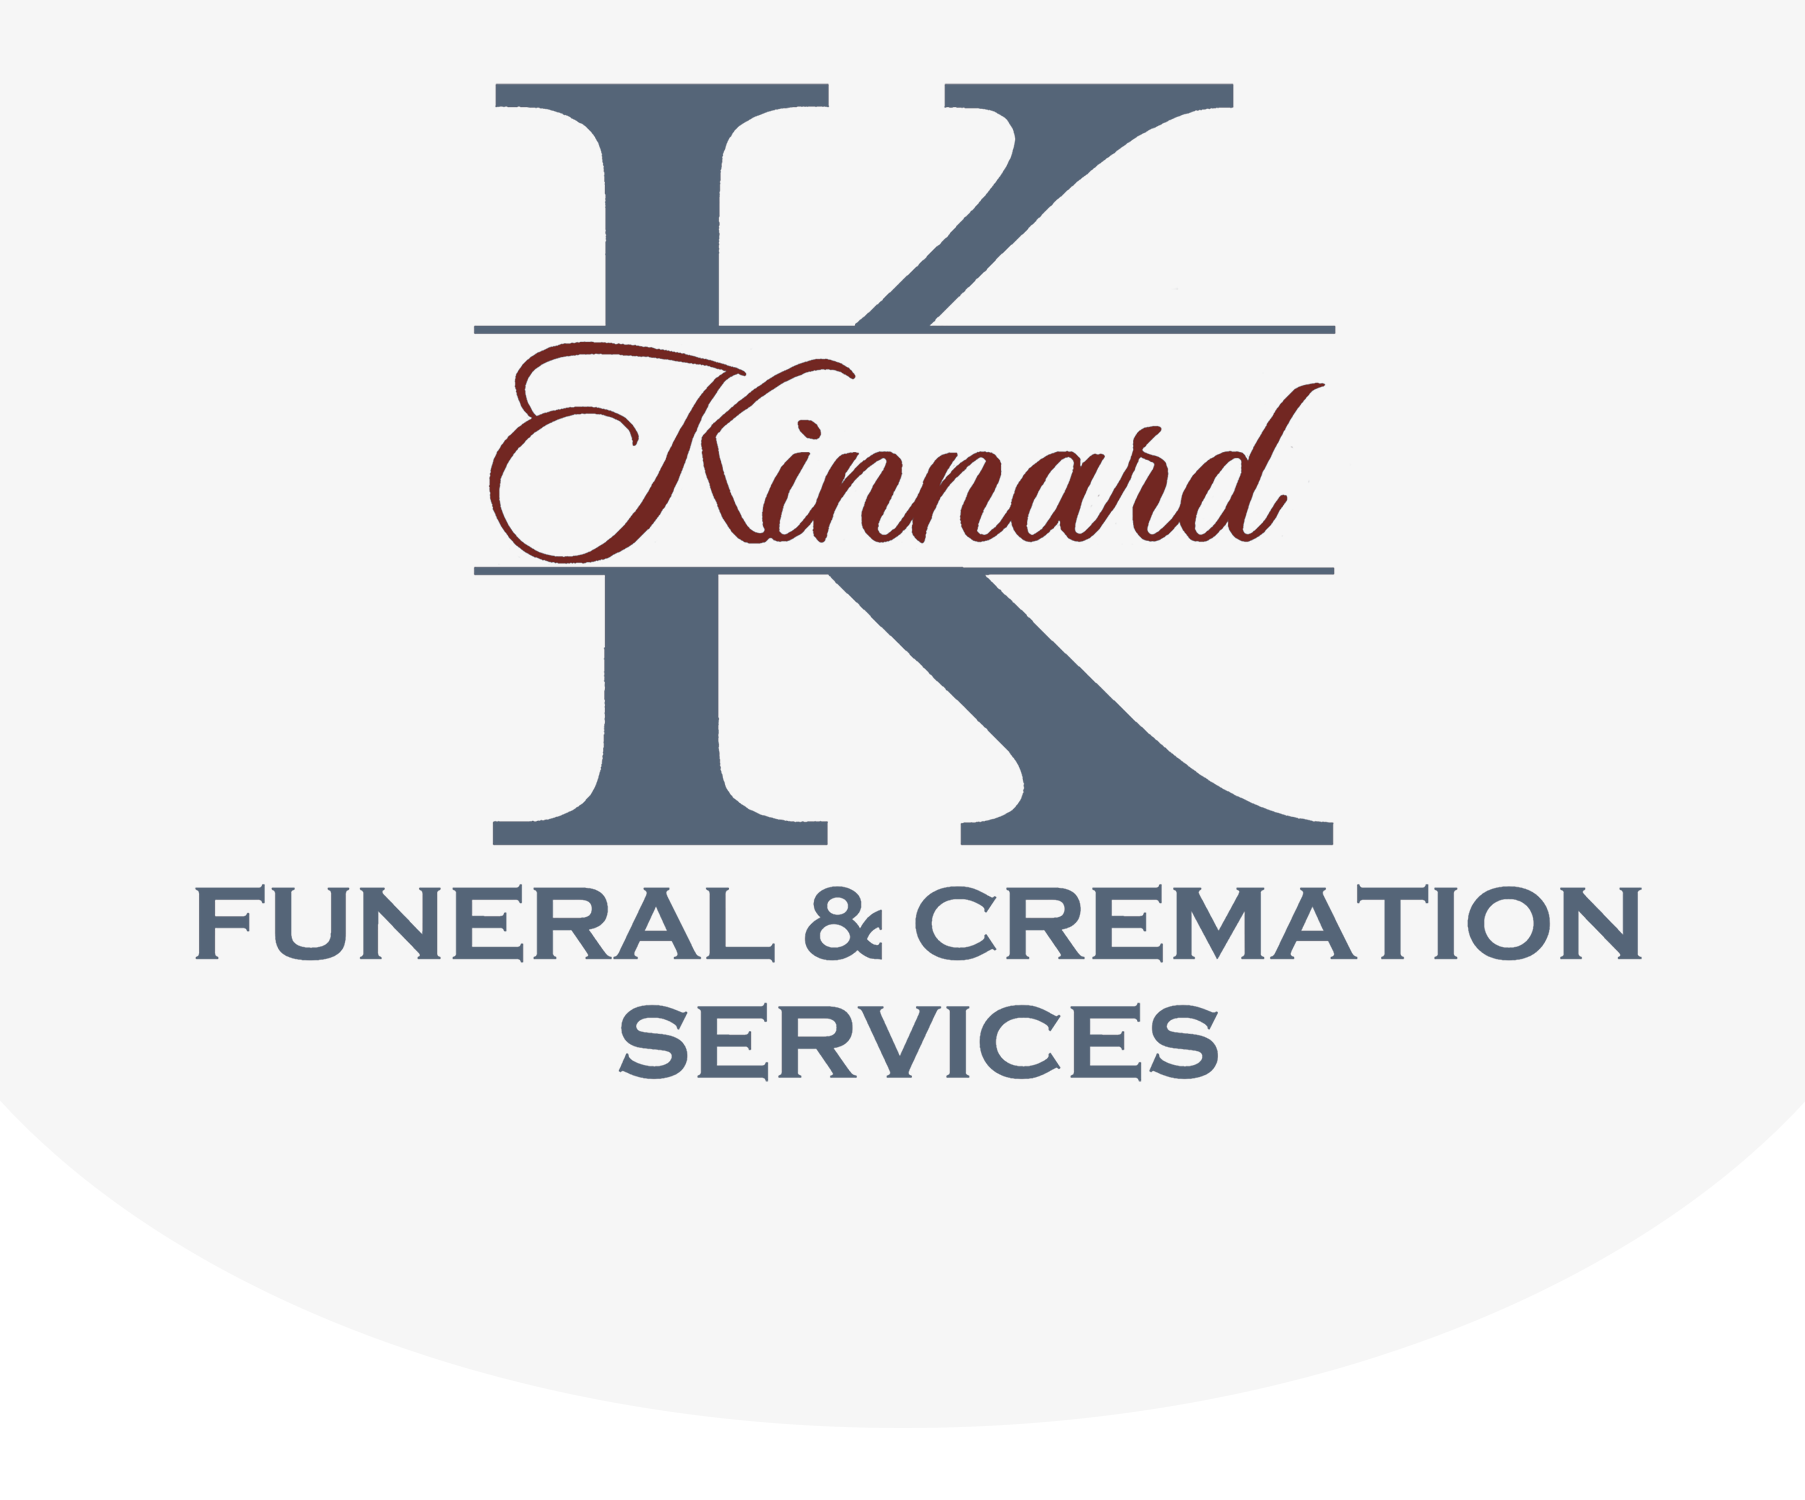 Kinnard Funeral & Cremation Services Logo